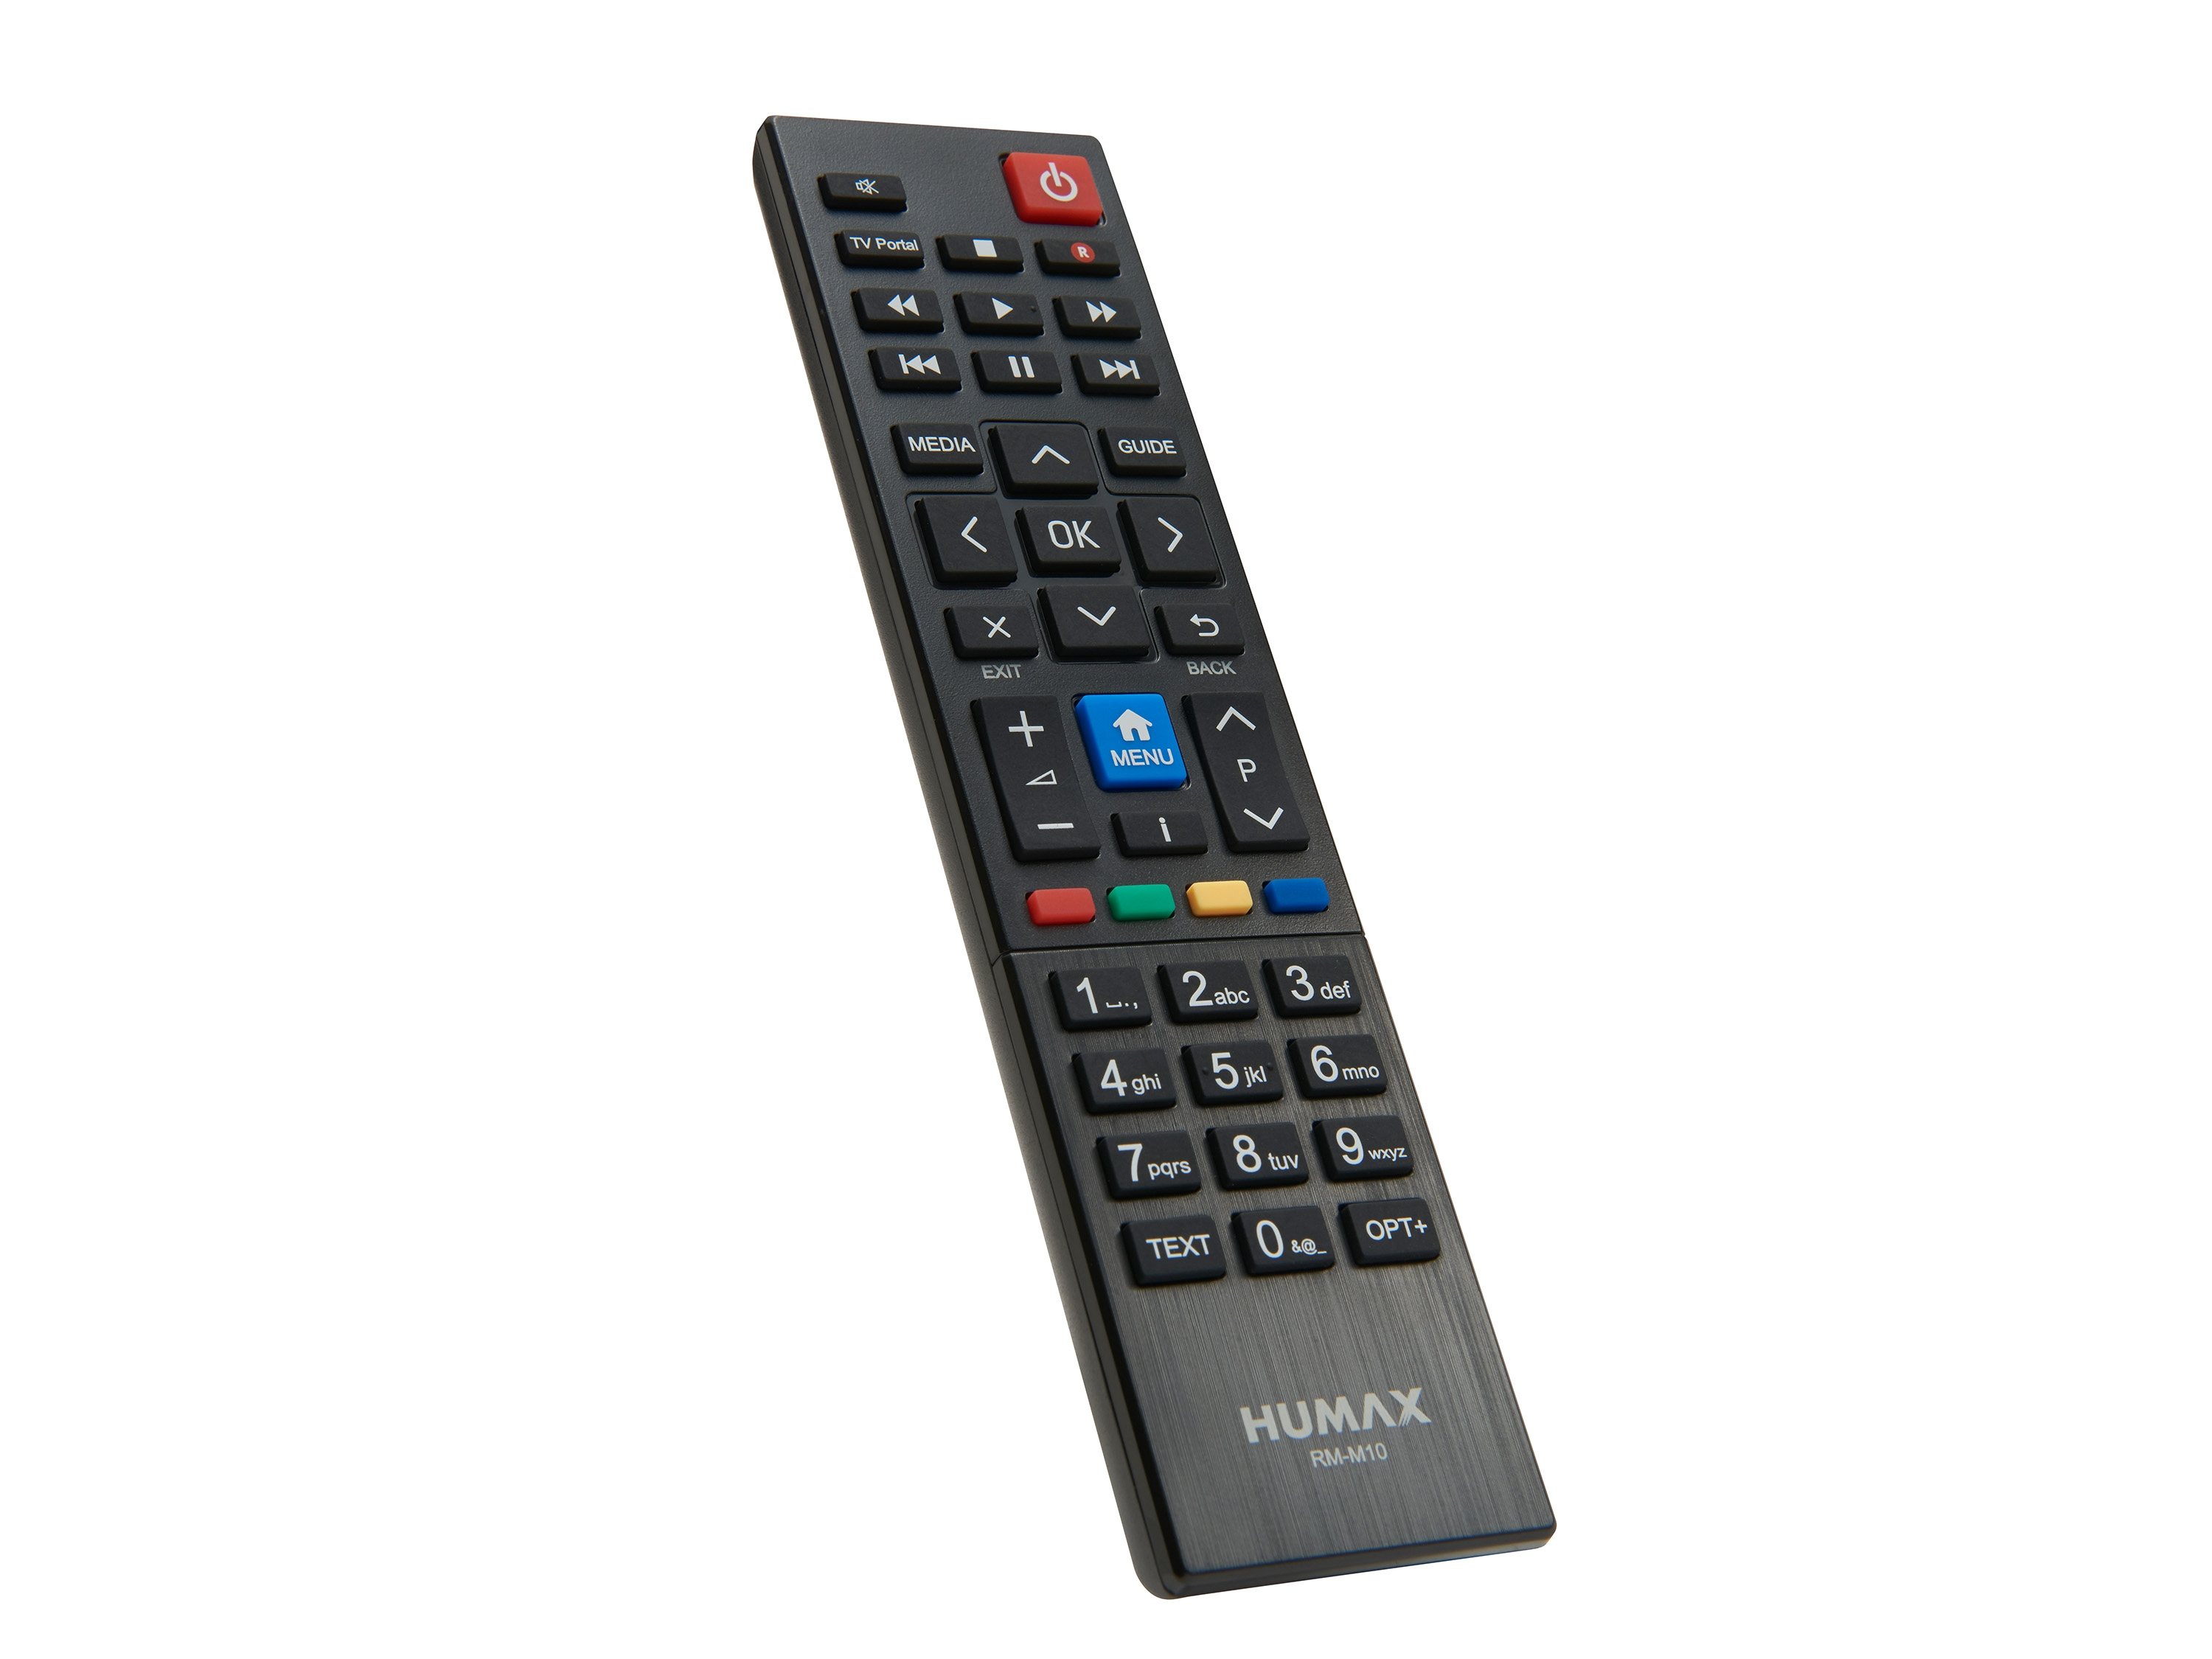 HUMAX HD NANO T2 DVB-T-Receiver PVR-Funktion, (HDTV, schwarz)